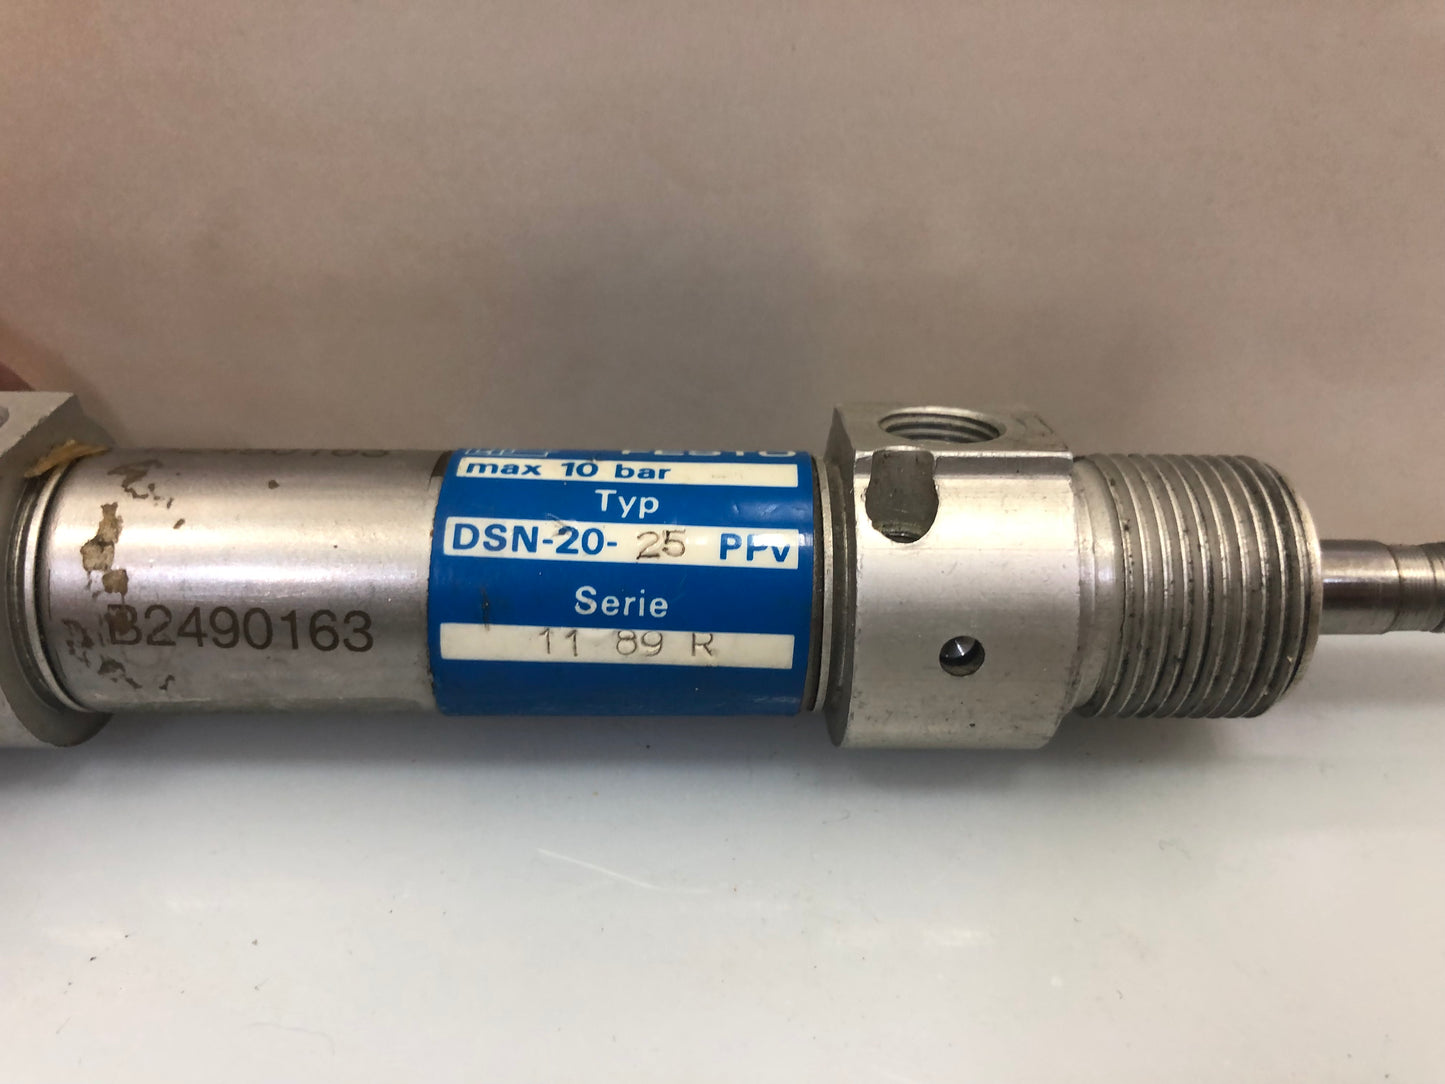 Festo Cylinder DSN-20-25-PPV 1189R